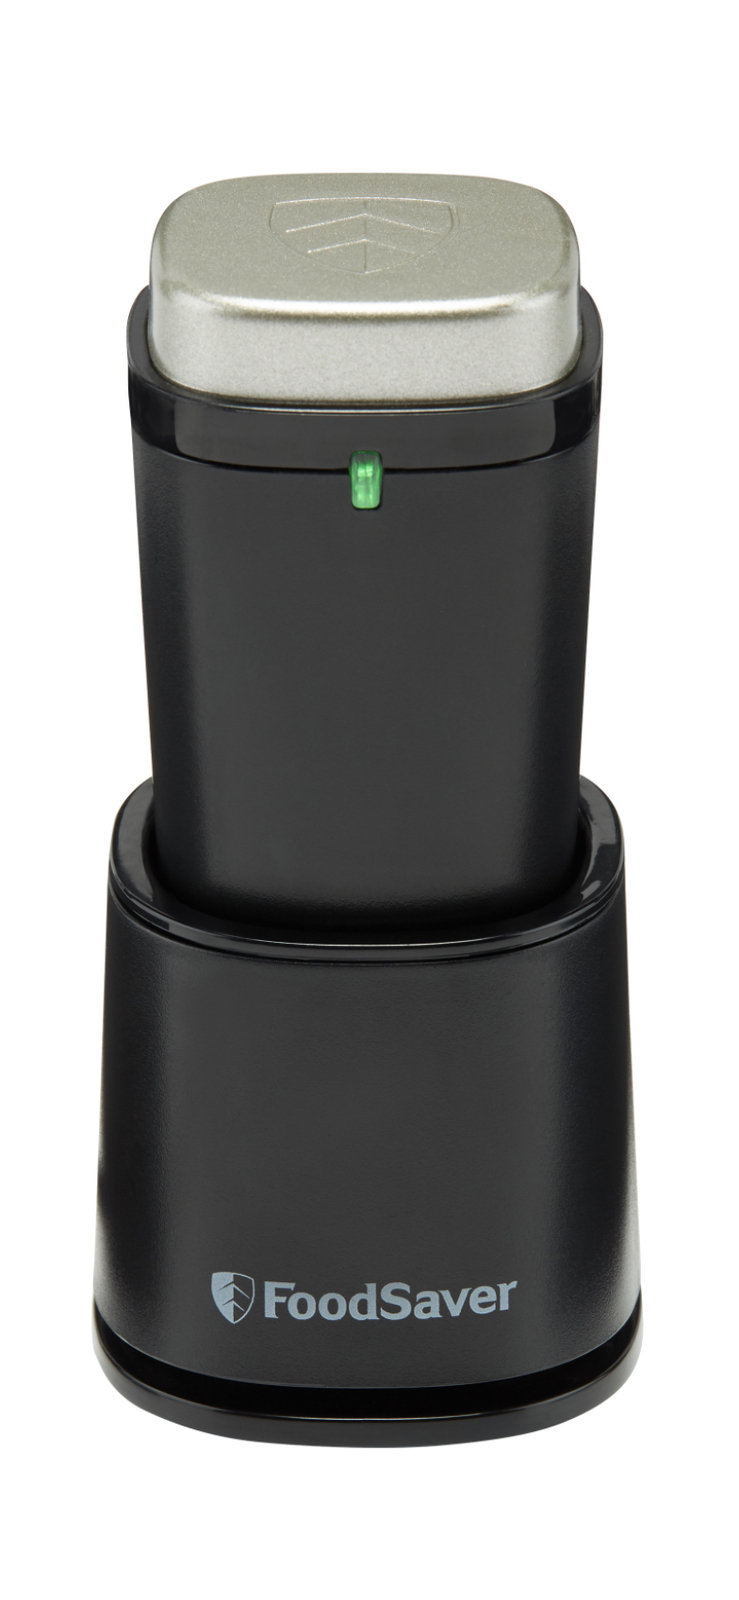 Primary image for FoodSaver Cordless Handheld Food Vacuum Sealer, Keep Food Fresh, Home Use